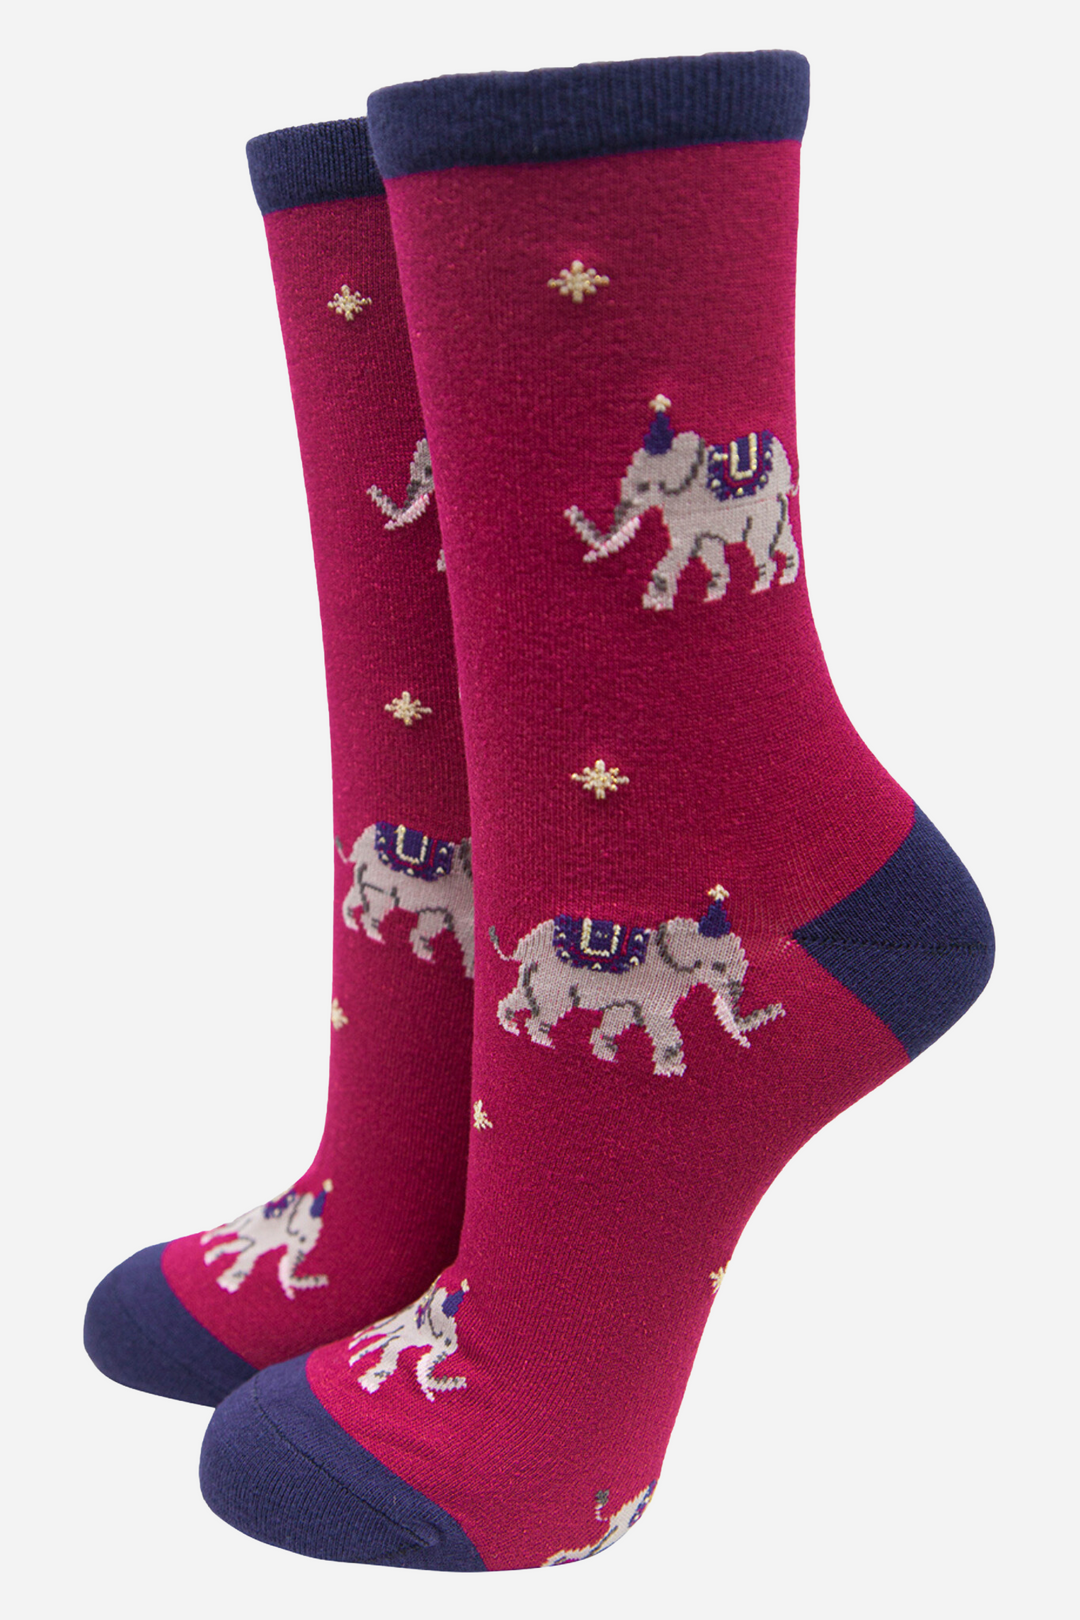 Women's Bamboo Socks Party Animal Elephant Tiger Cheetah Ankle Socks Gift Set Box